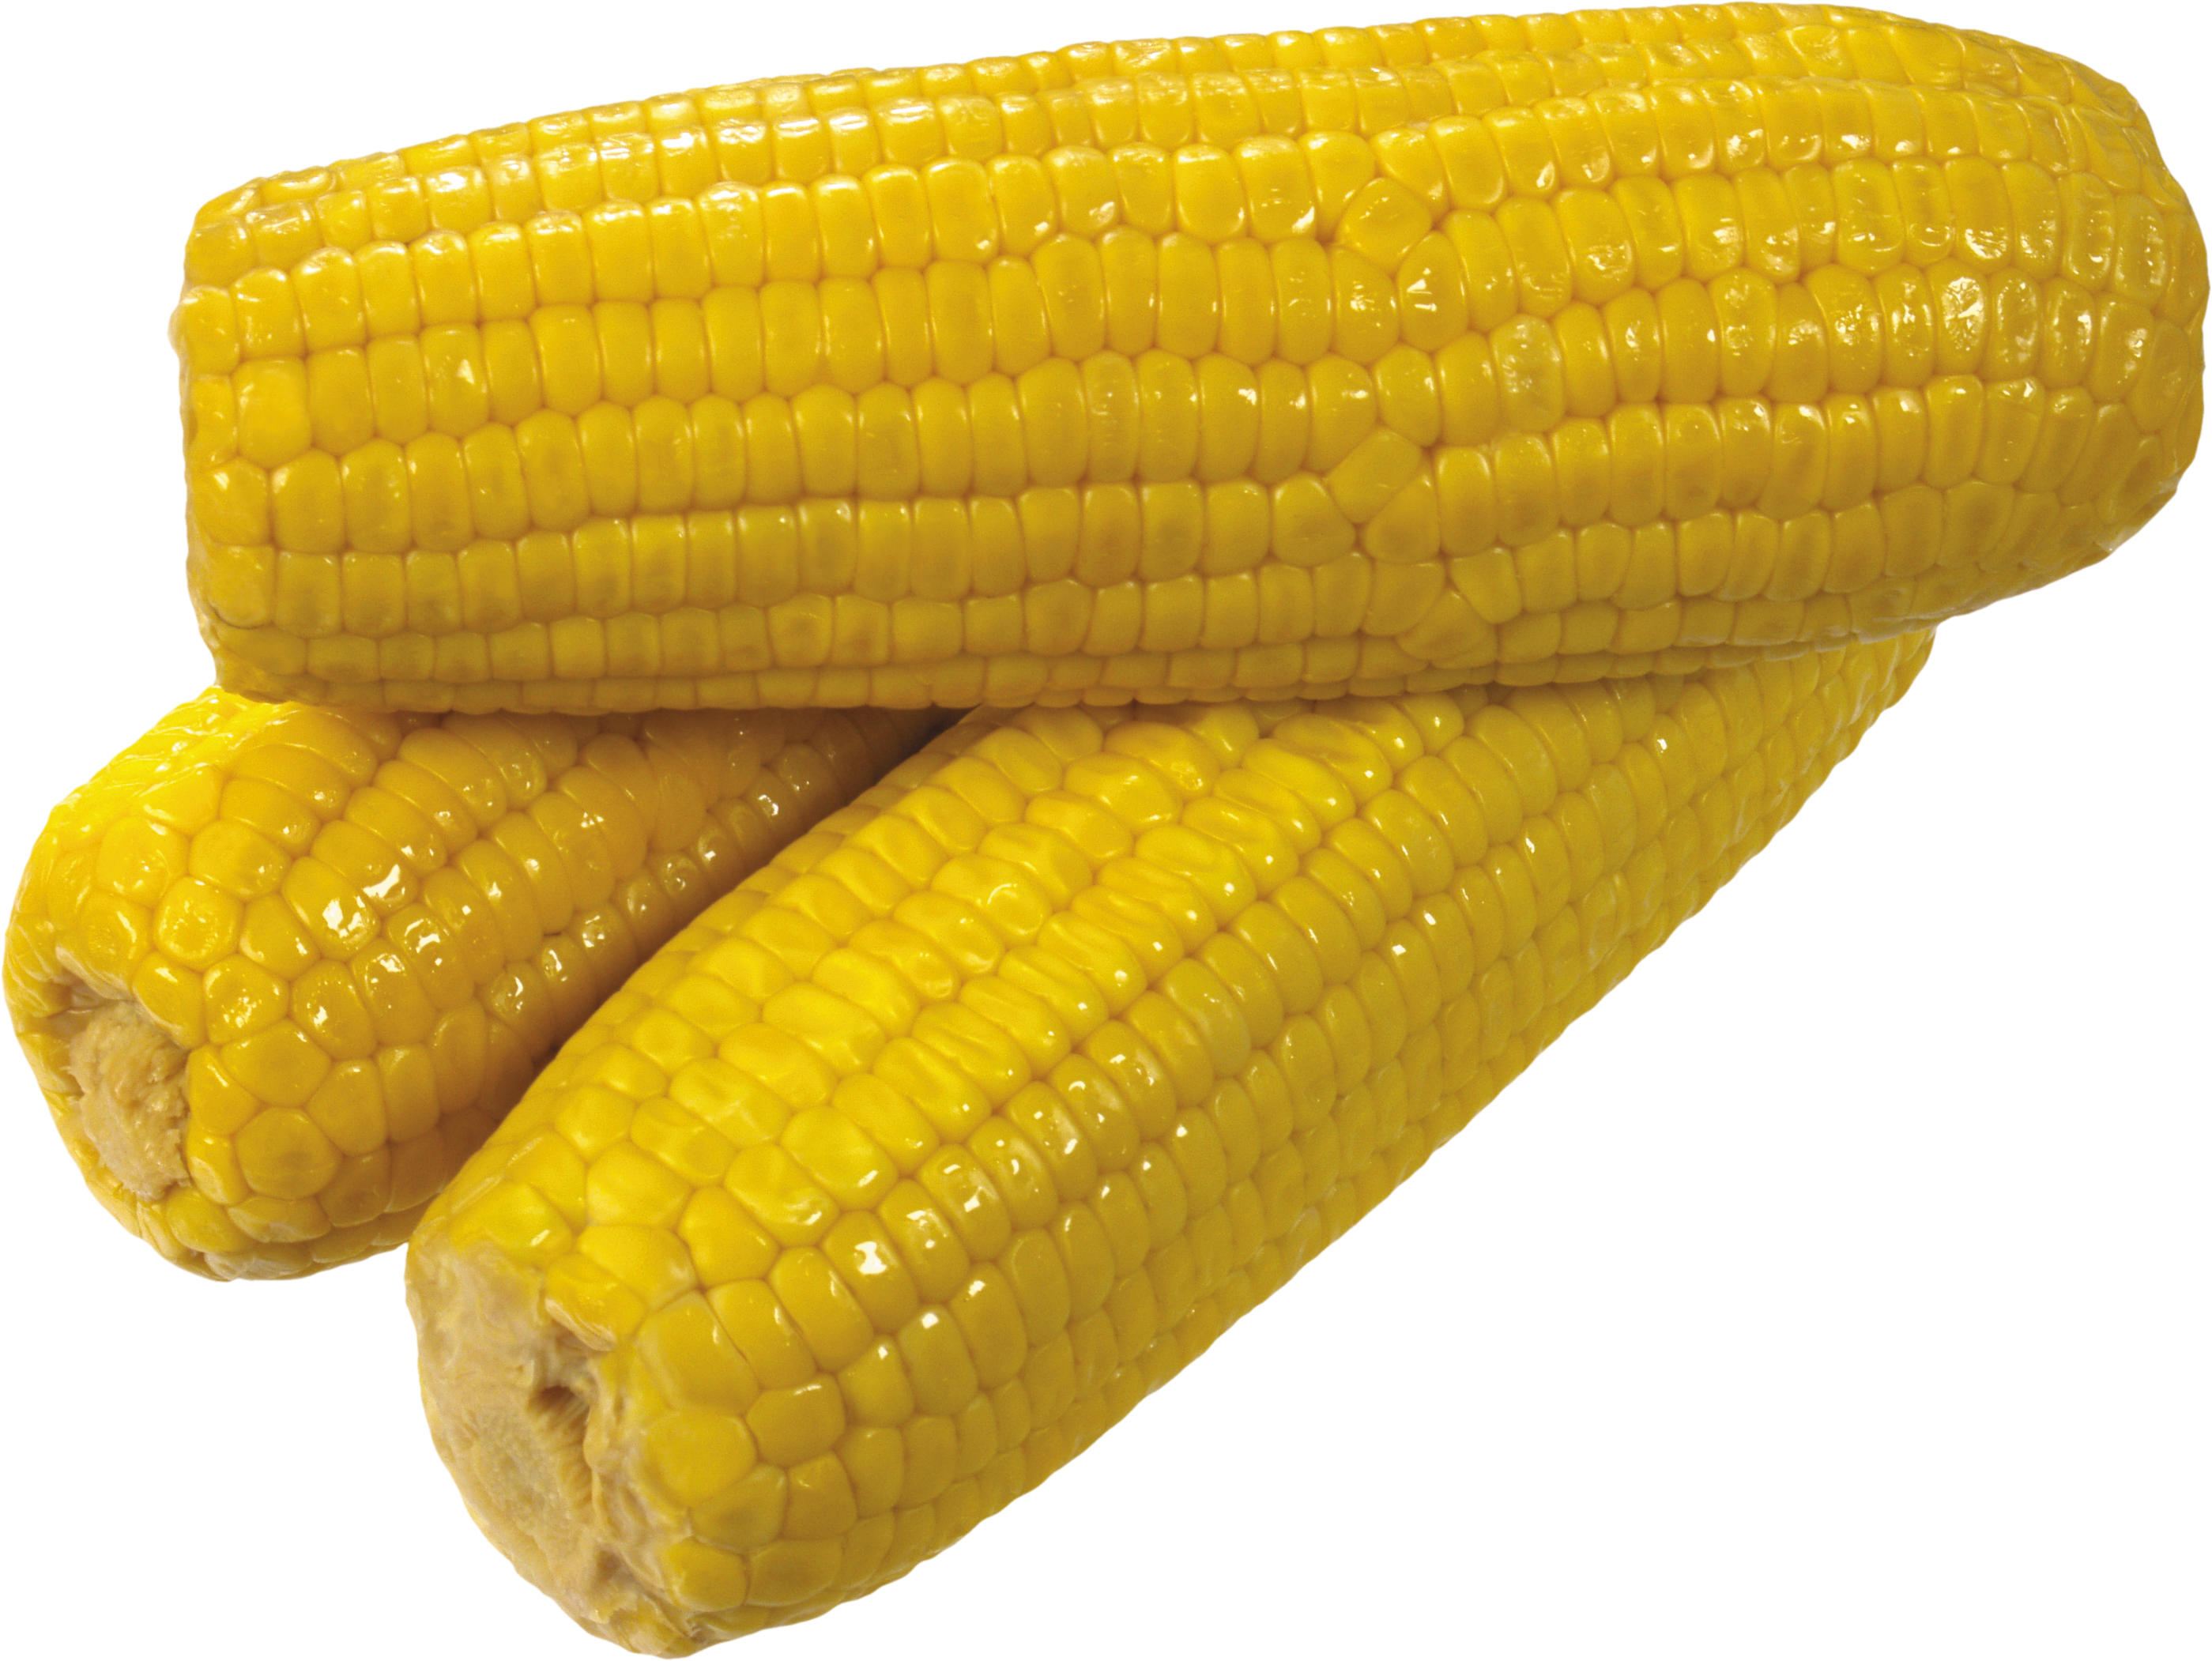 Du maïs jaune